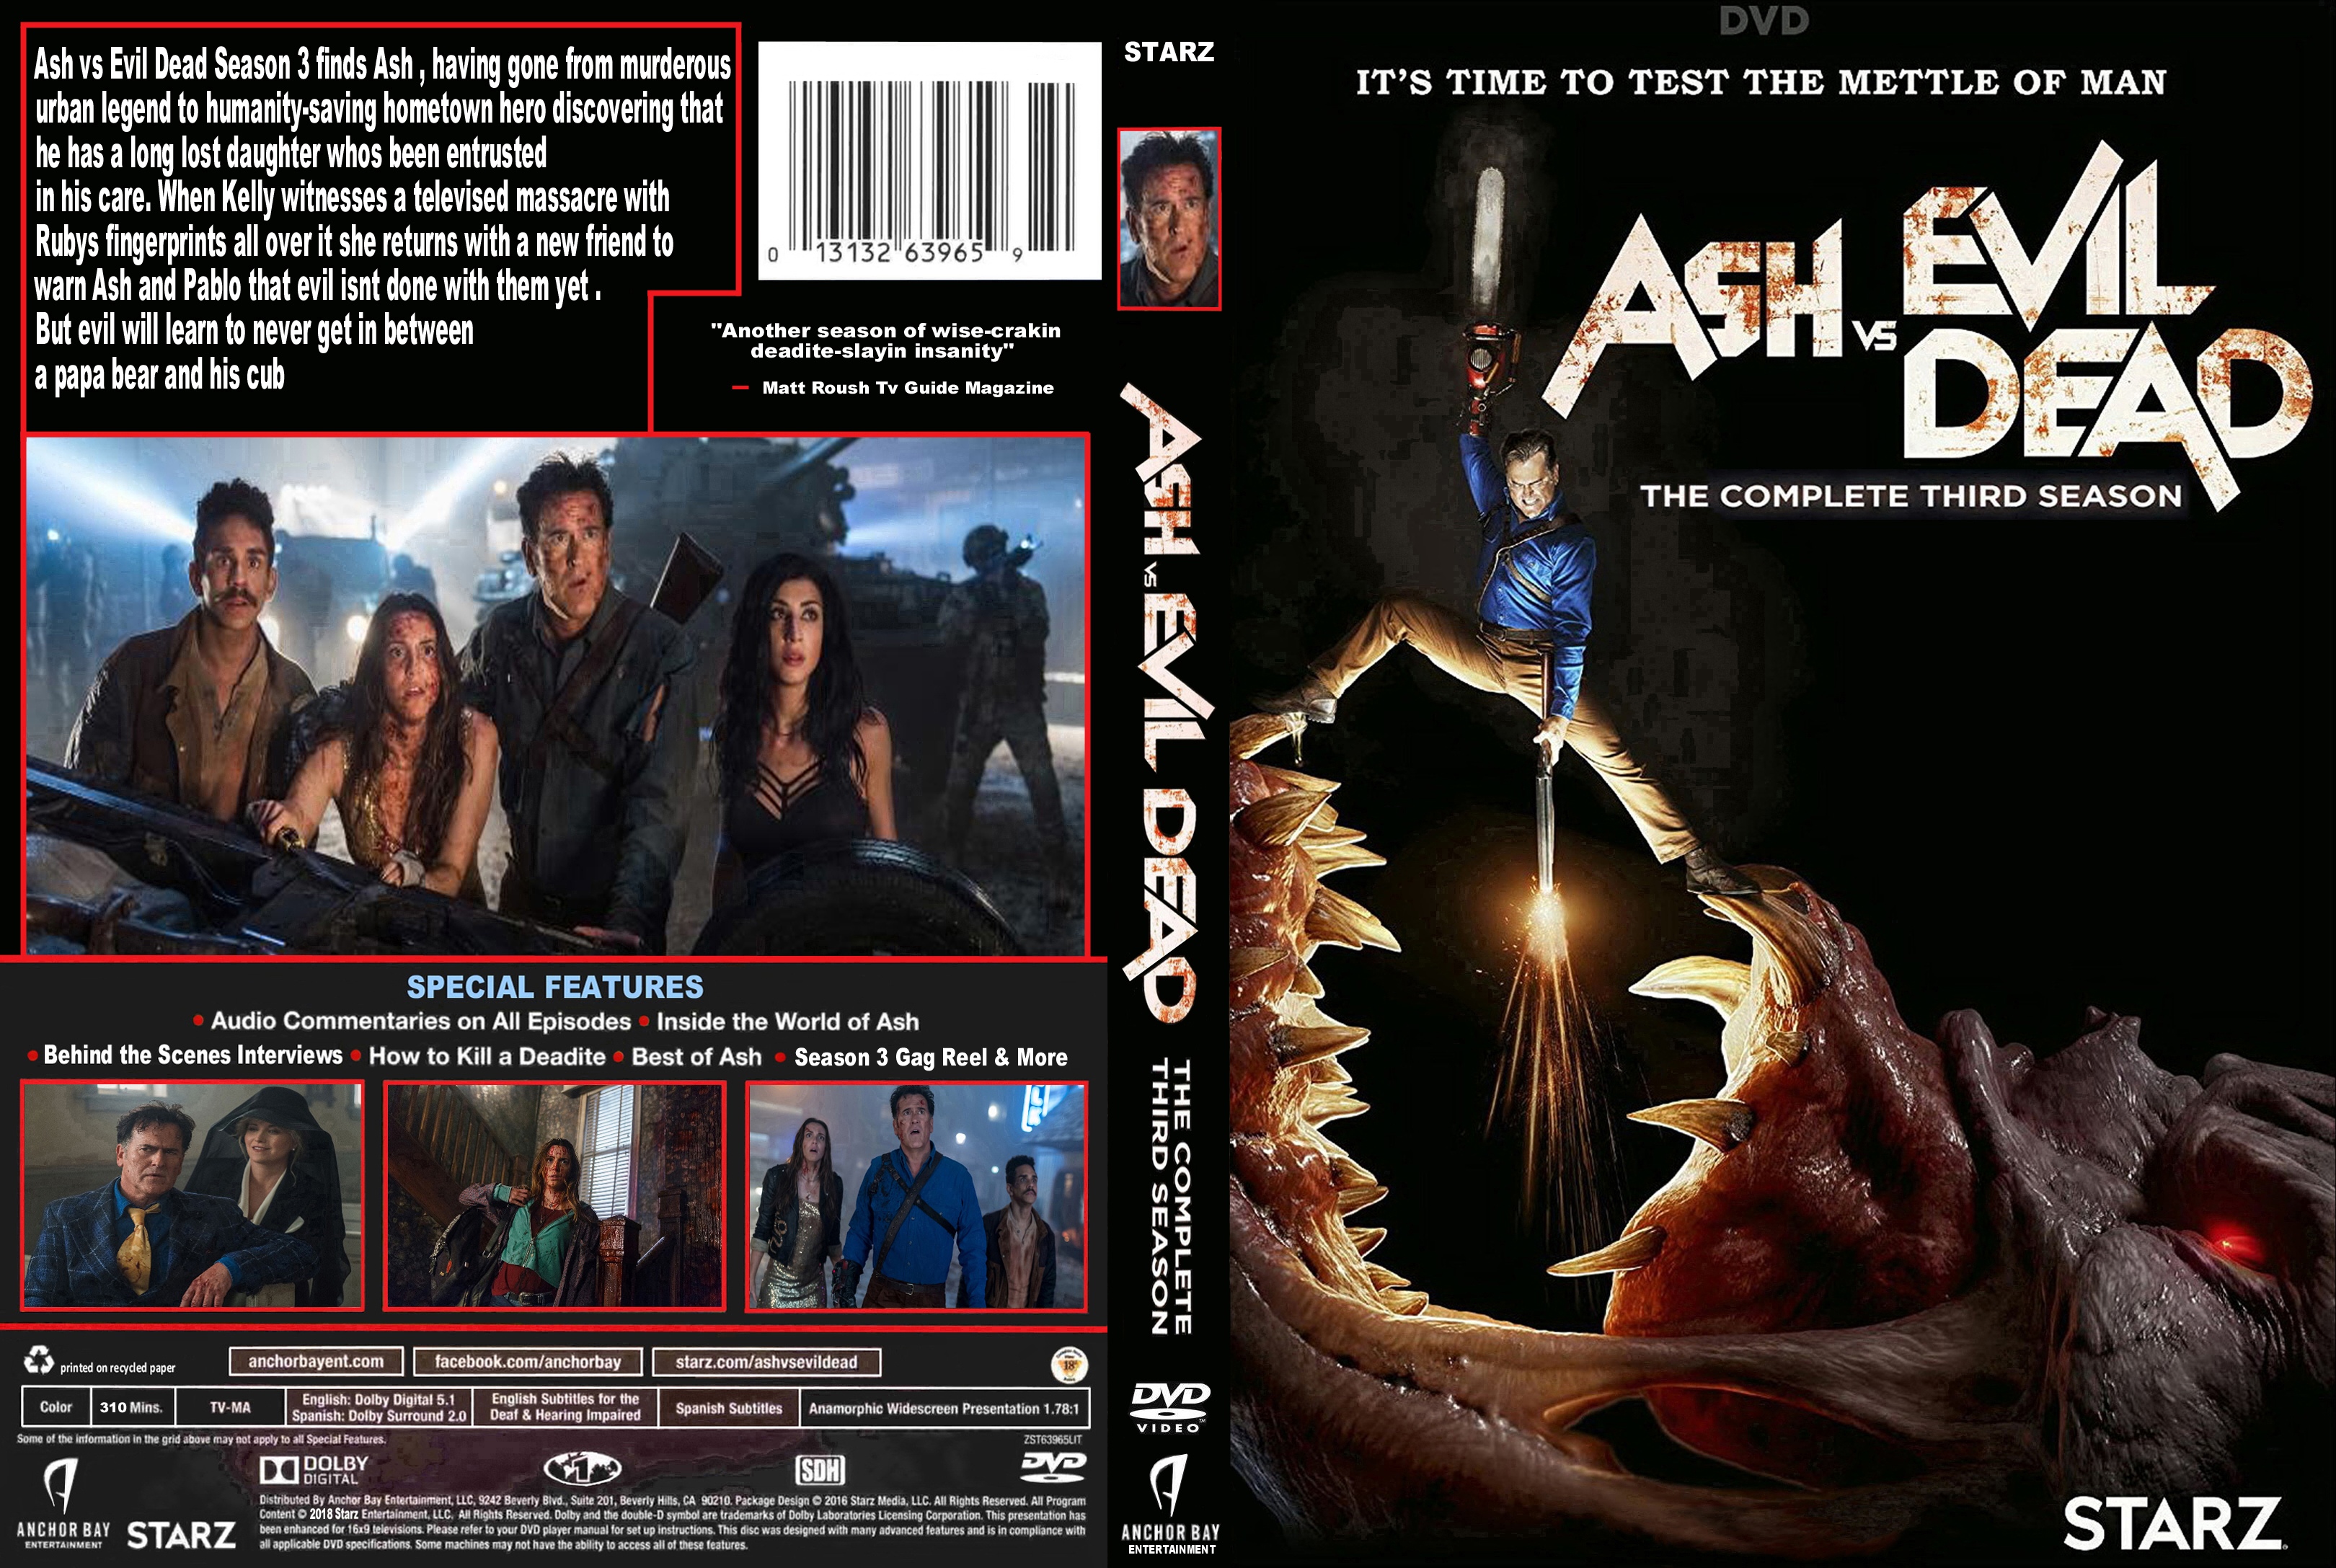  Evil Dead Trilogy [DVD] : Movies & TV